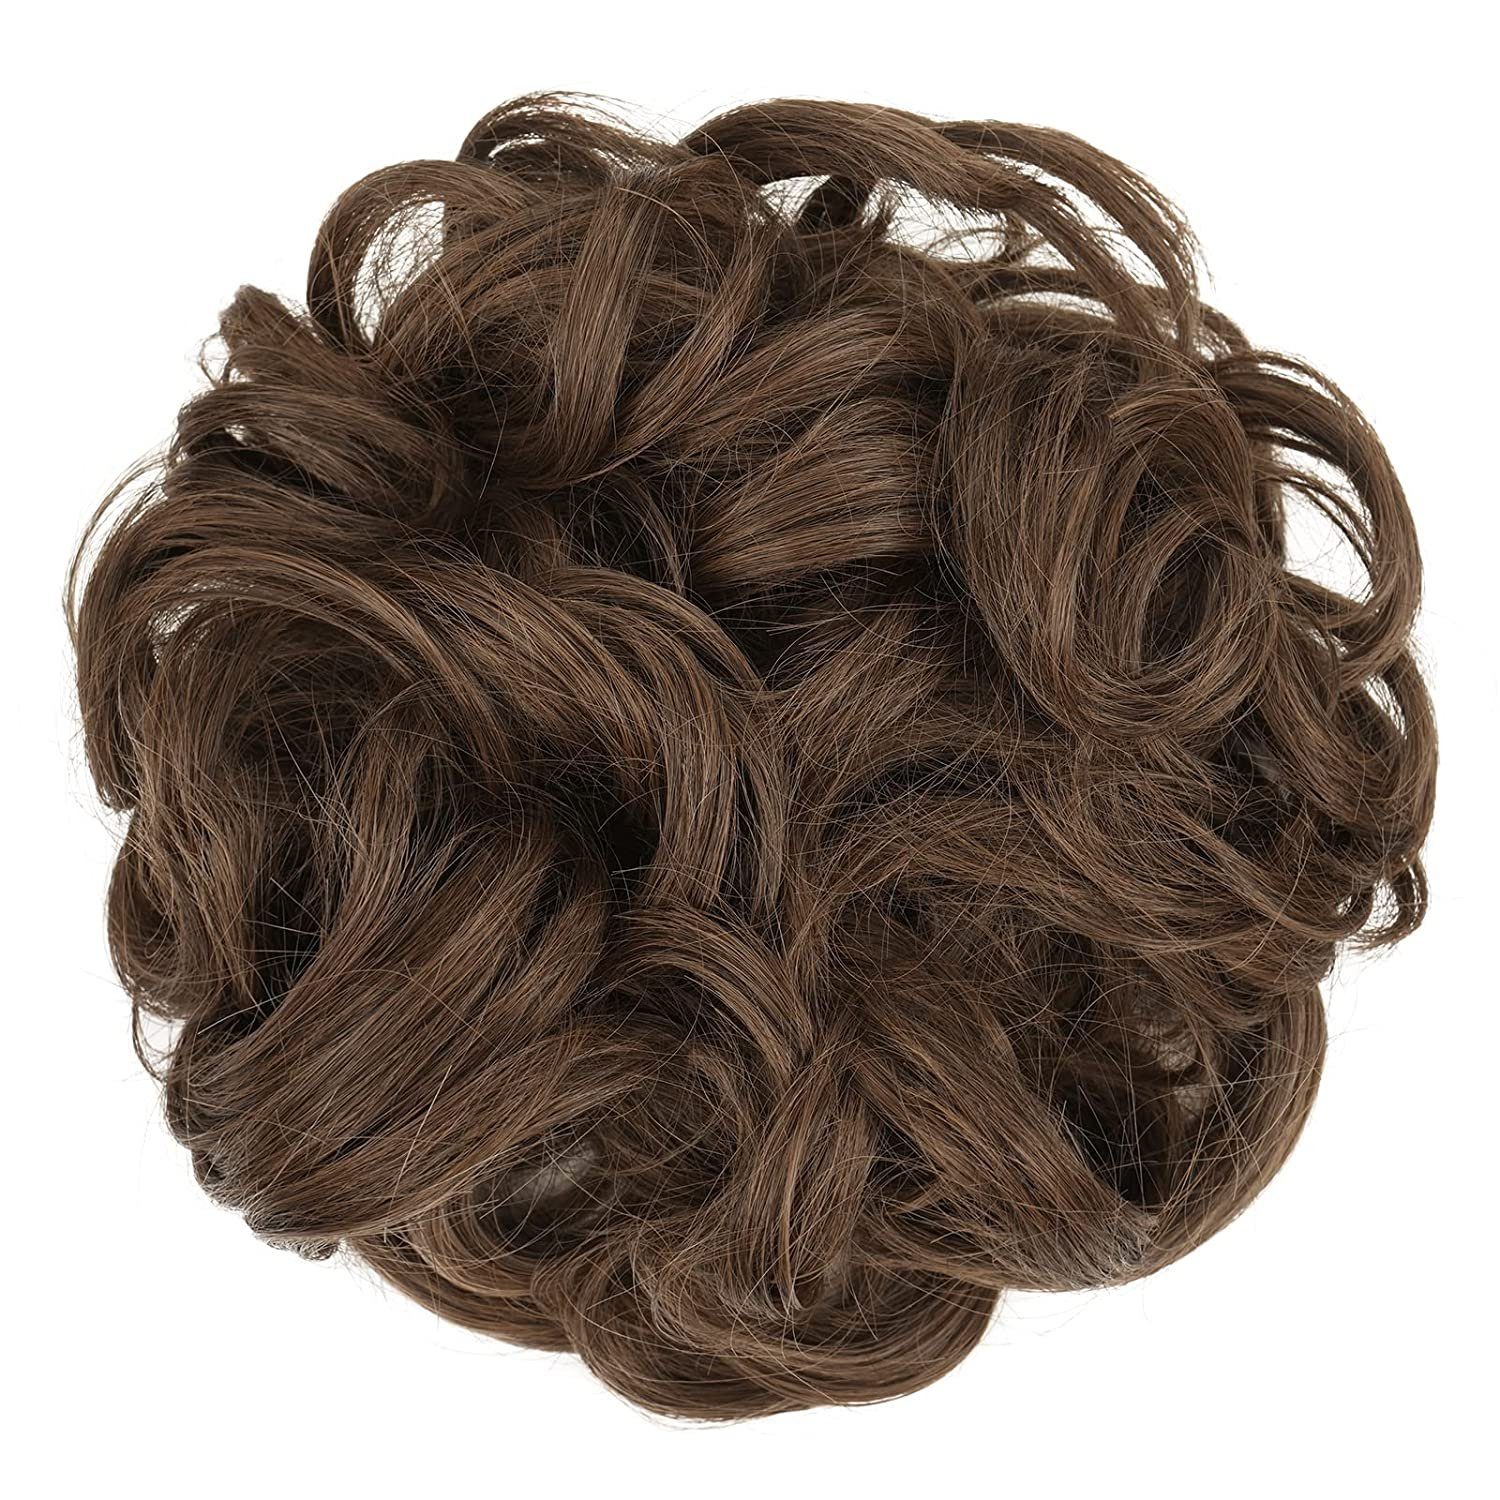 SCHUTA Unordentlicher Haarknoten Kunsthaar-Extension Gewellt Haarteil Haarteil Karamellbraun Haarverlängerung